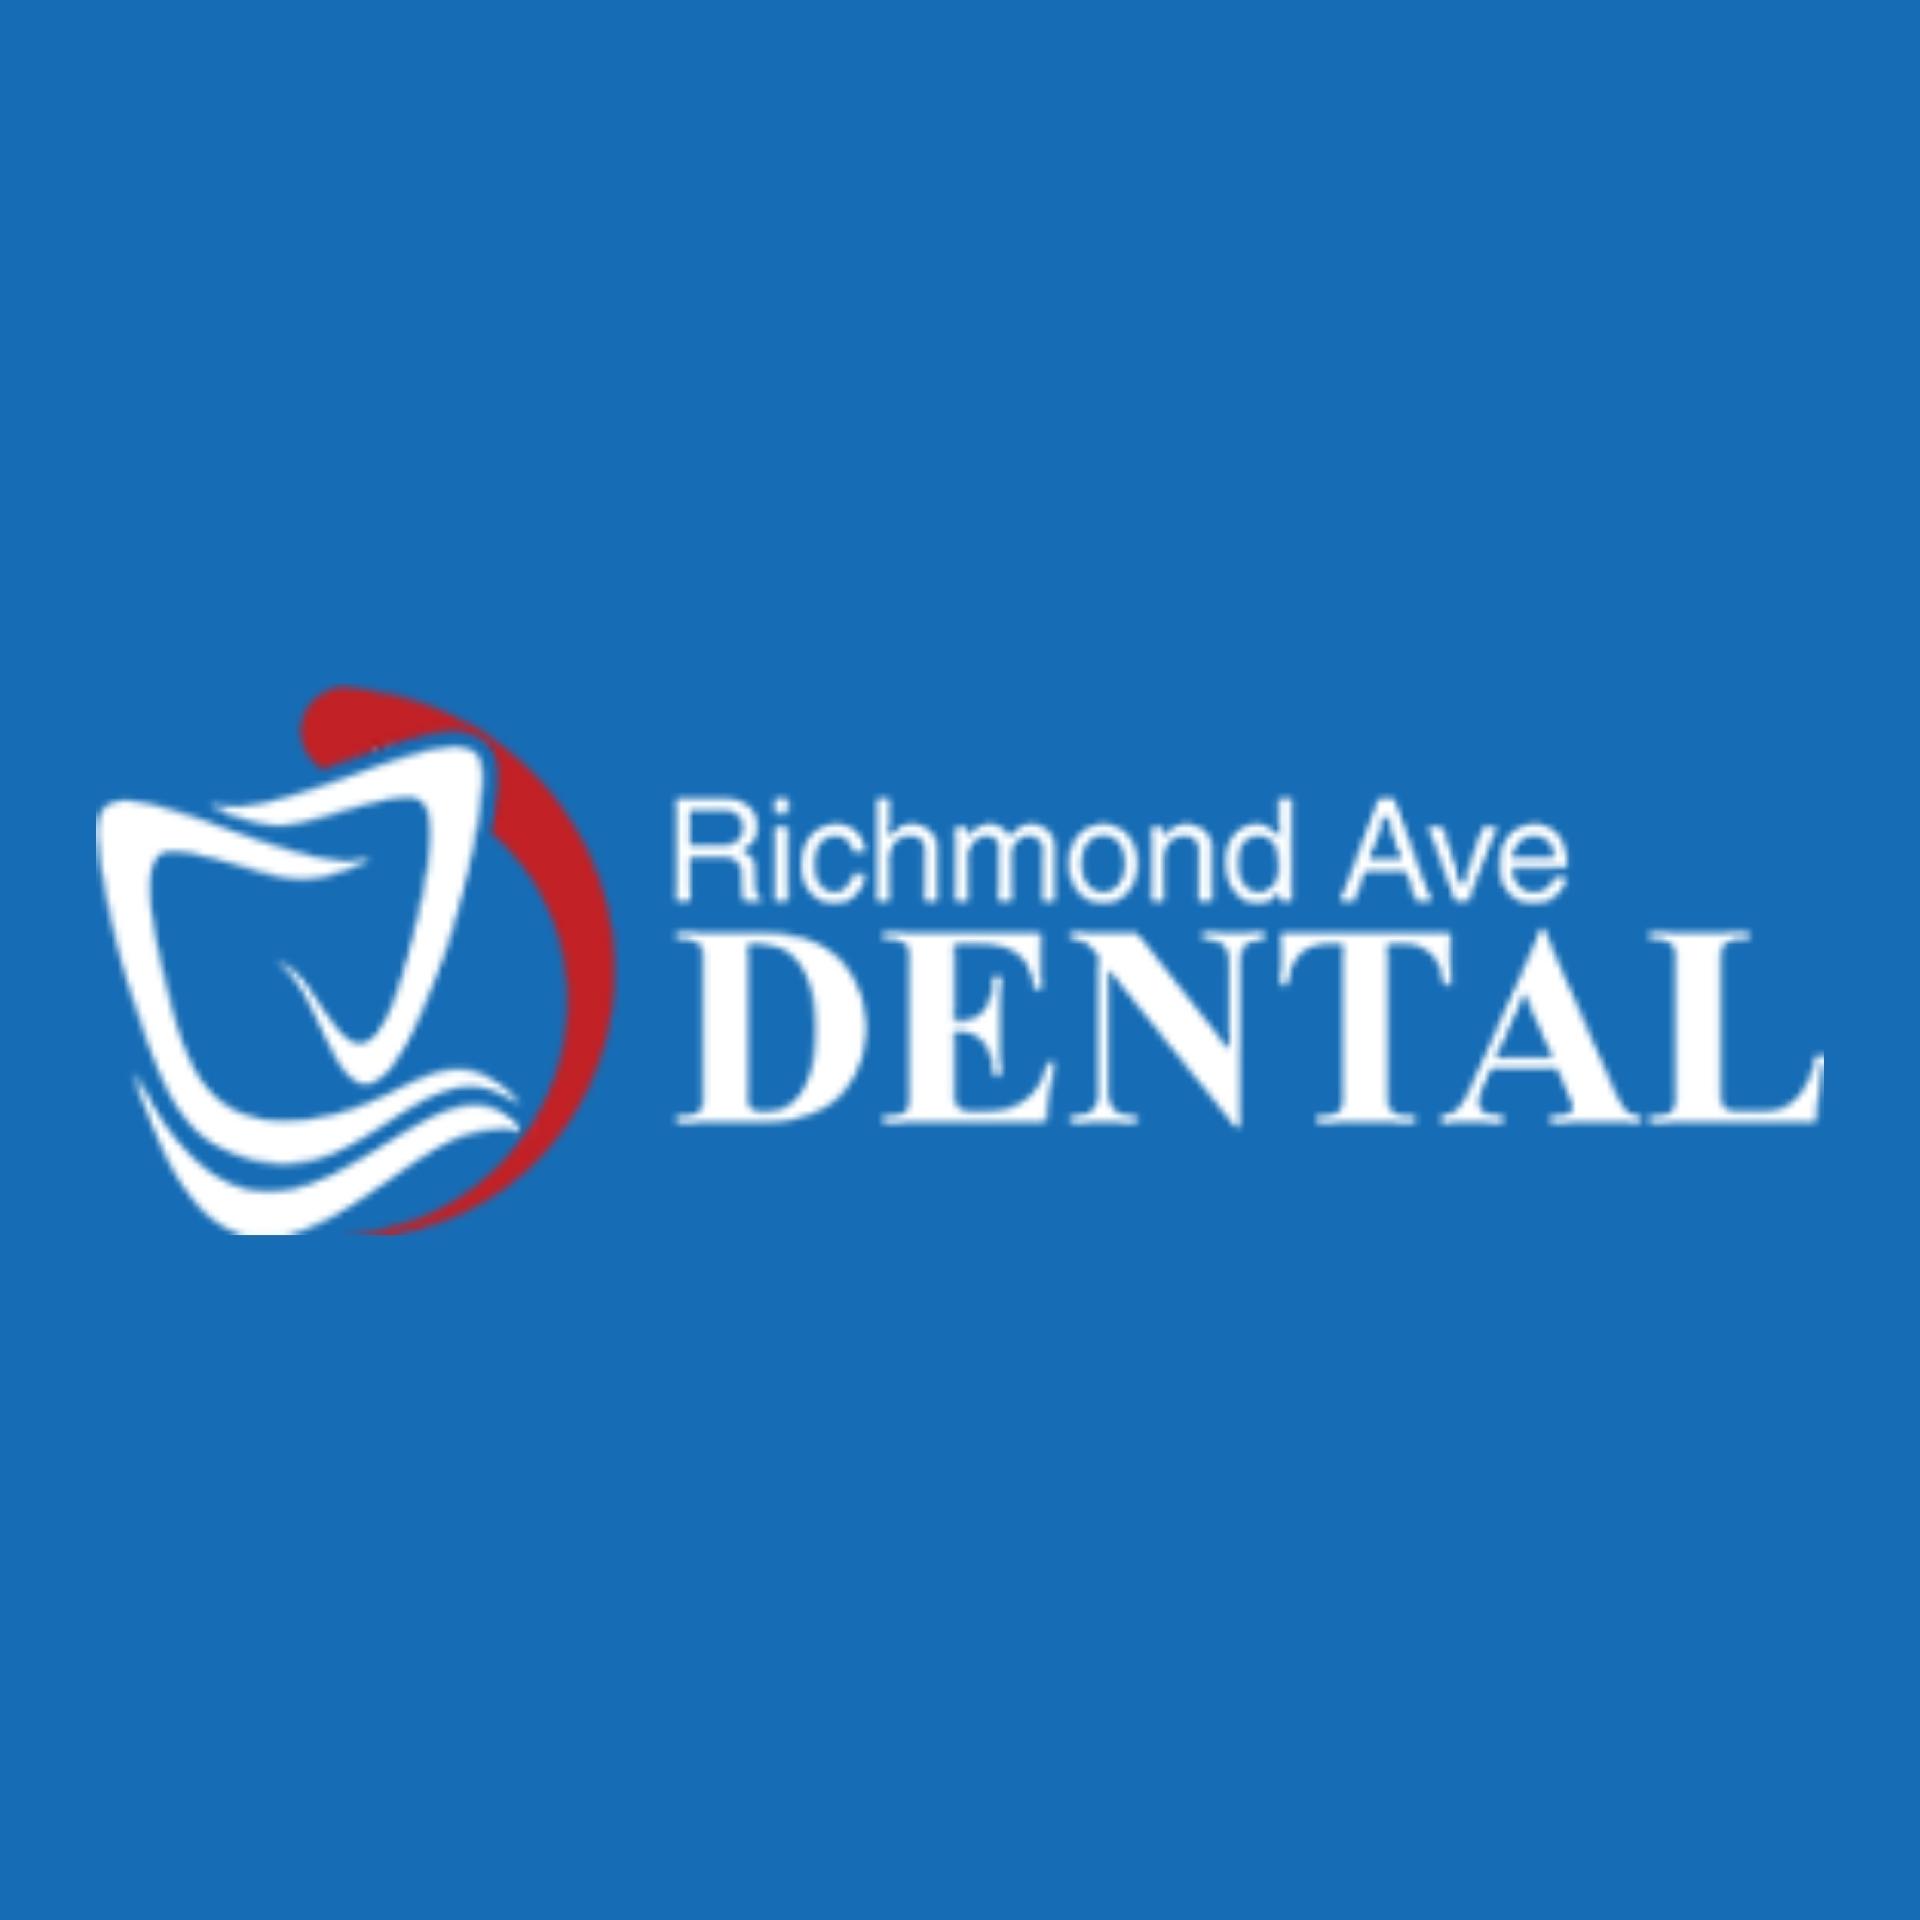 <a href="https://www.google.com/maps/contrib/115187434790467032048/photos/@40.59446,-74.098352,17z/data=!4m3!8m2!3m1!1e1?hl=en-PH">Richmond Dental</a>